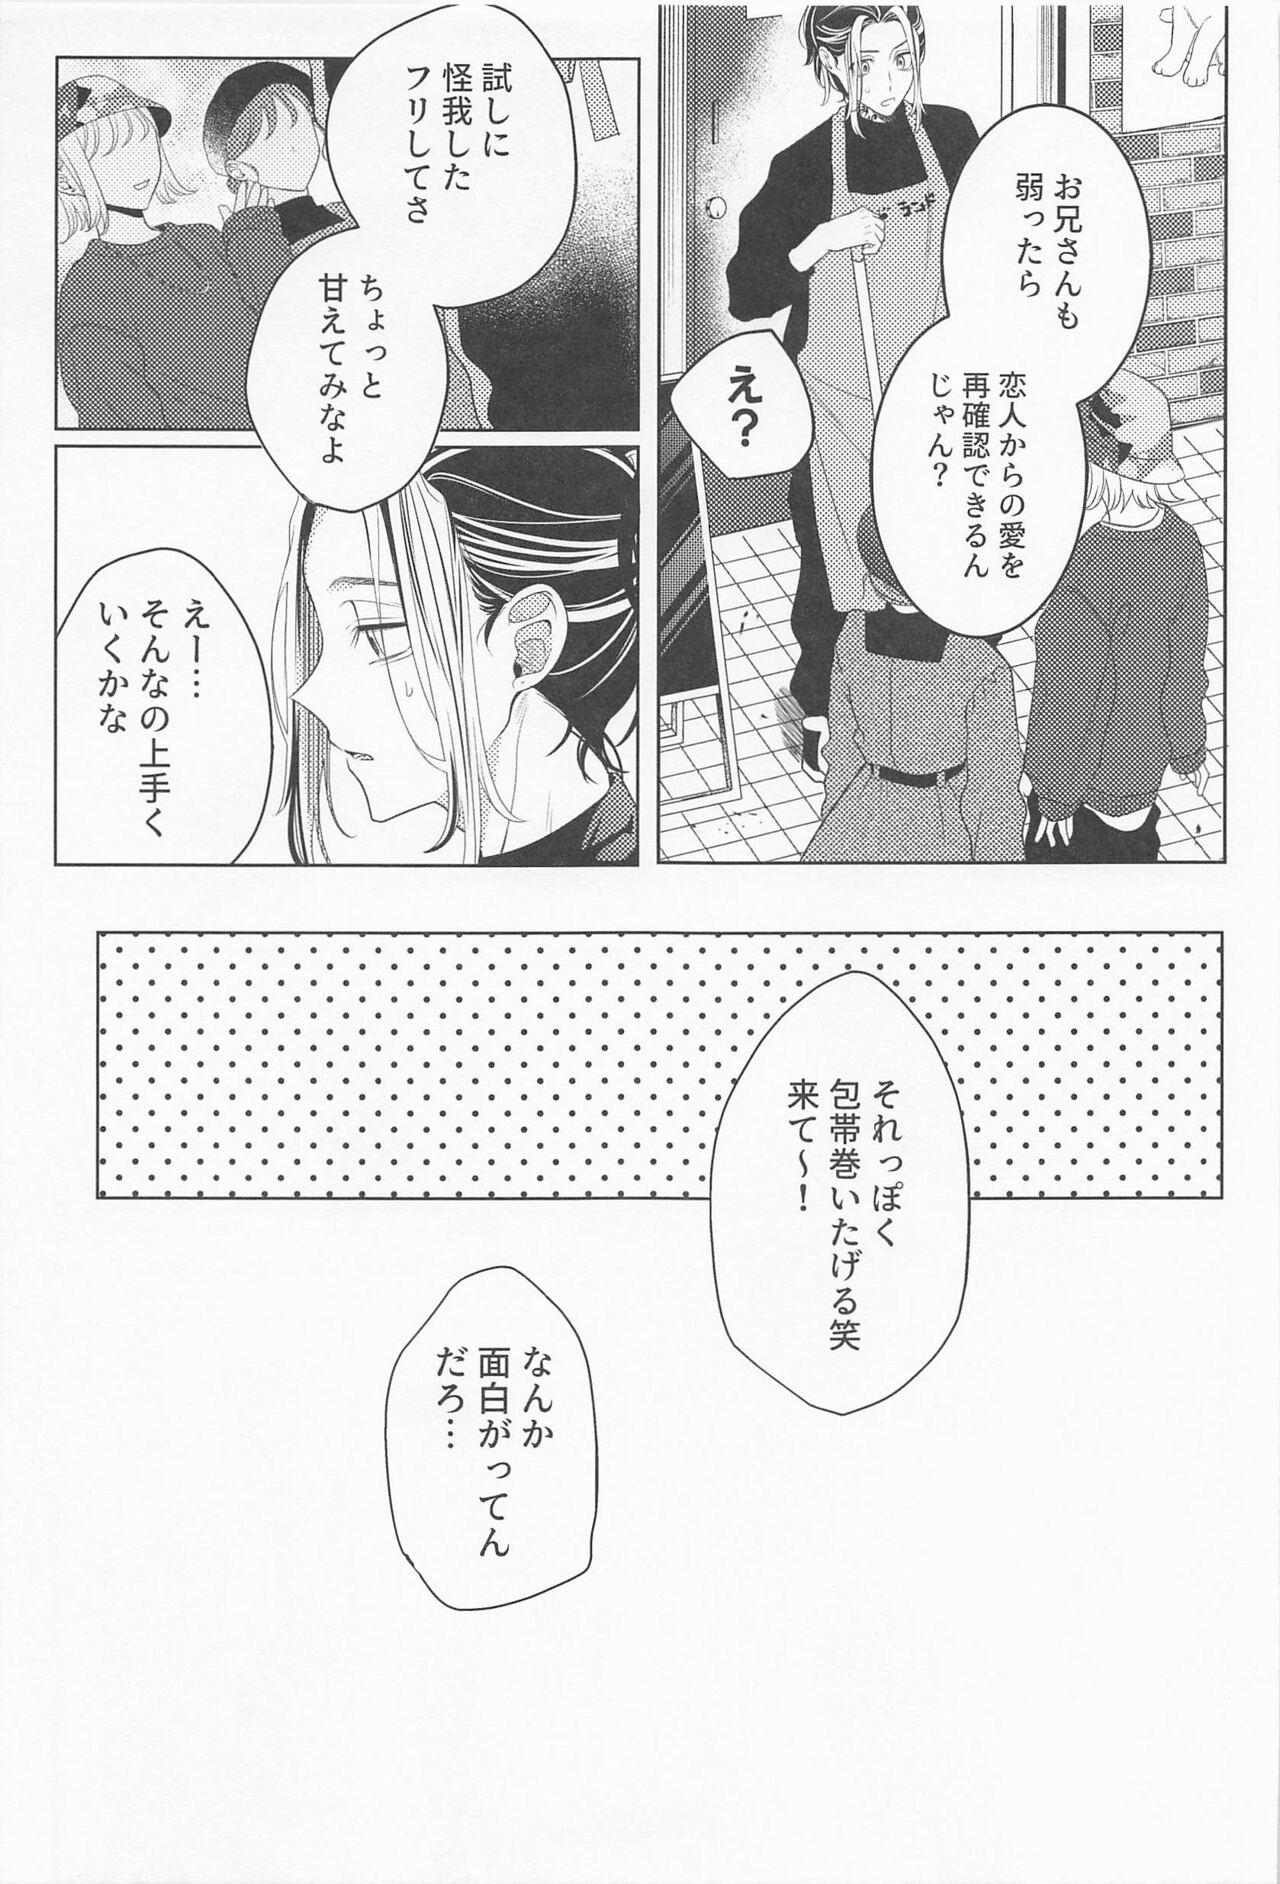 Her sukidakarashimpaishite - Tokyo revengers Highschool - Page 6